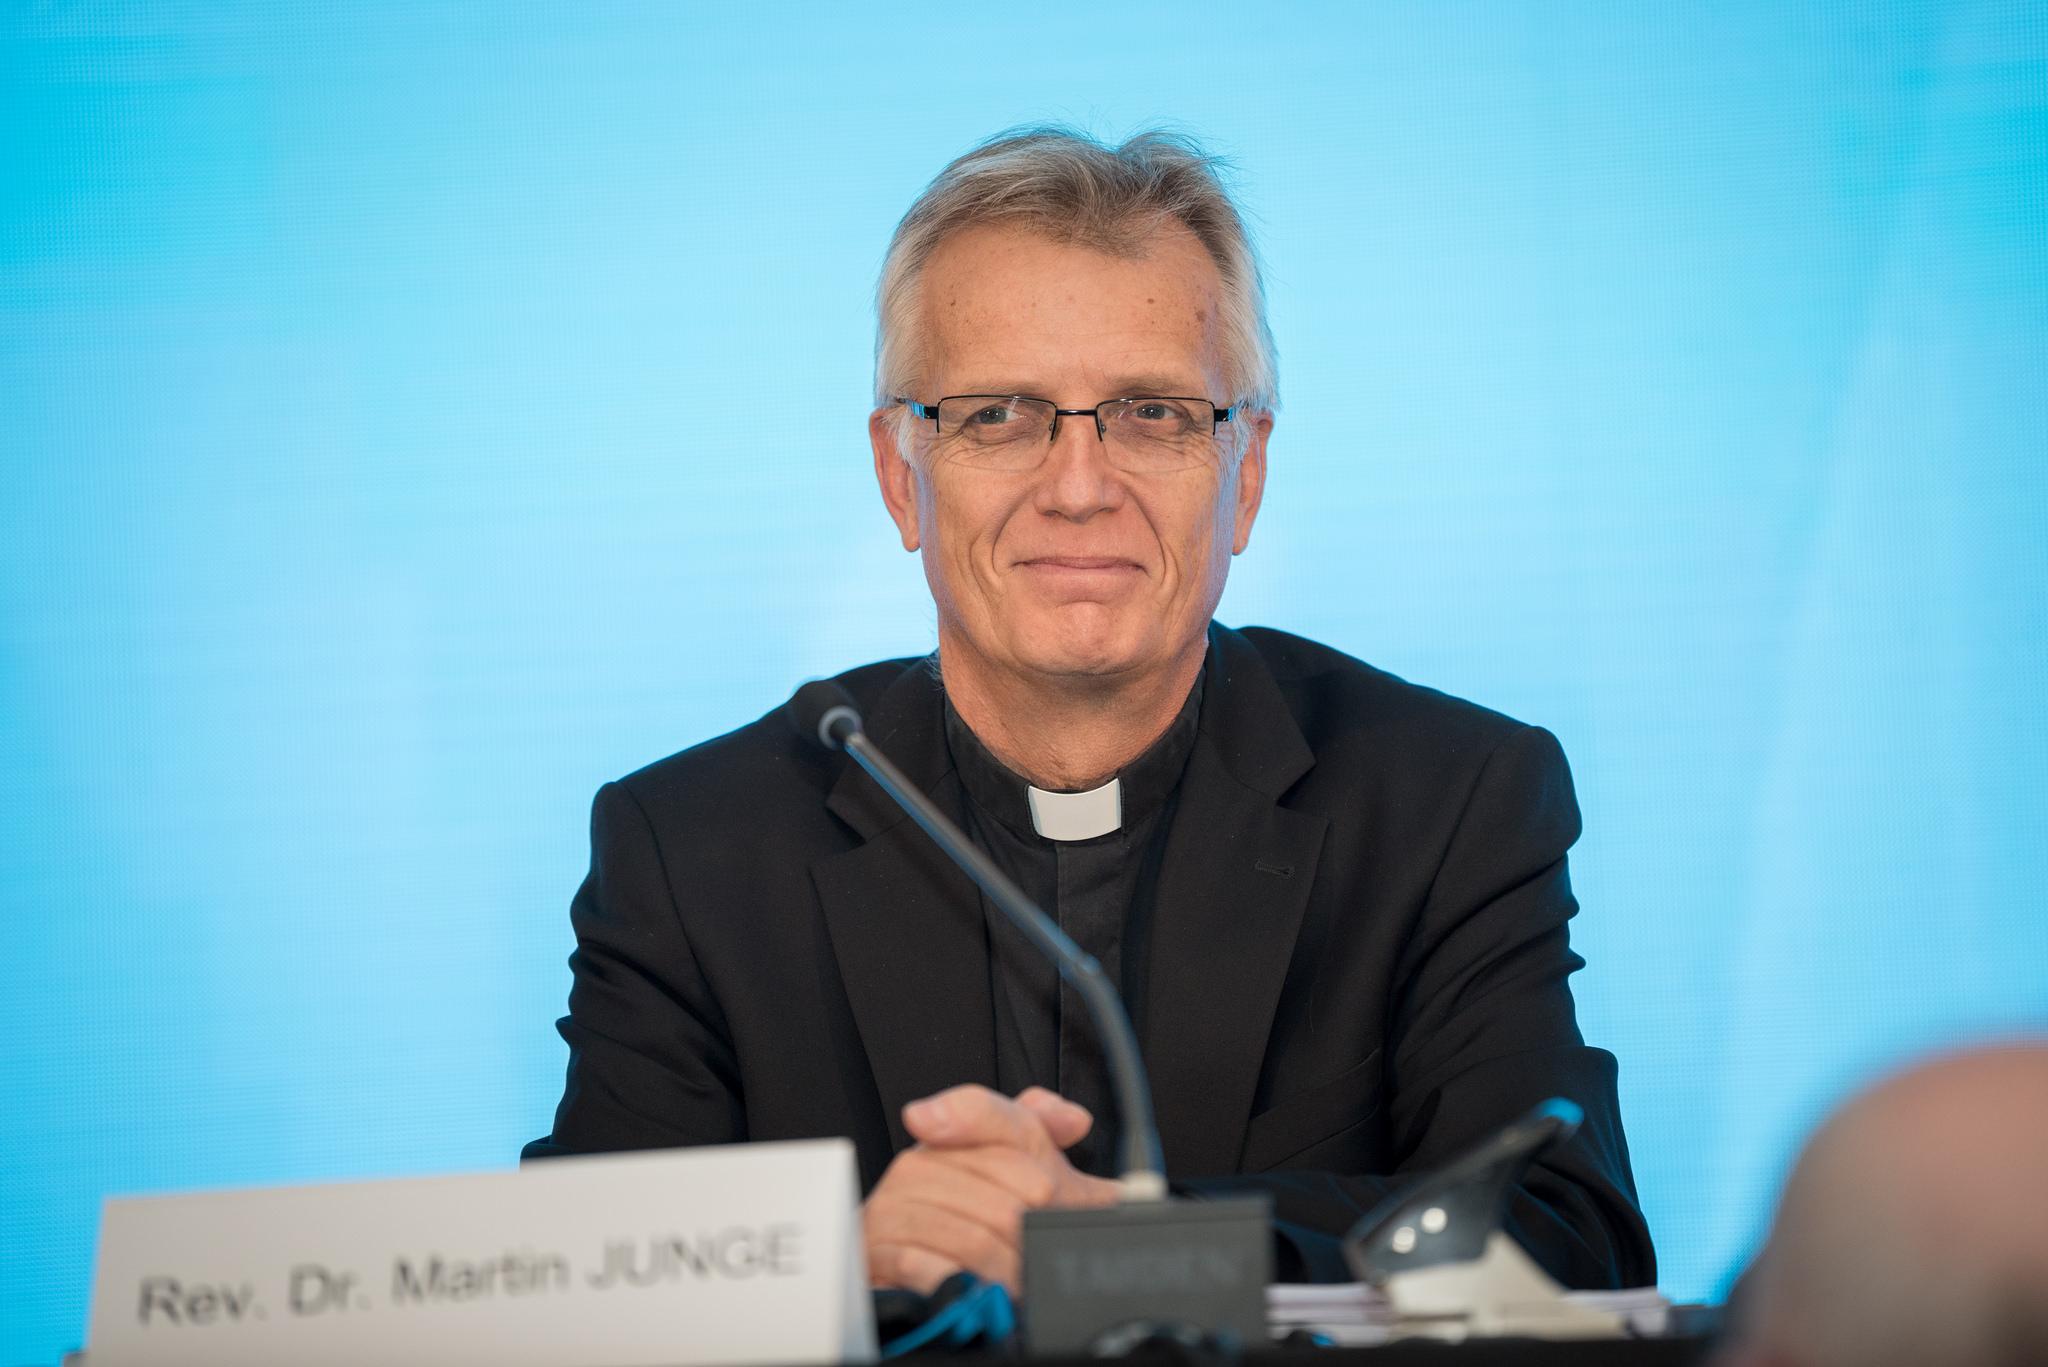 Rev. Dr Martin Junge, General Secretary of the Lutheran World Federation. Photo: LWF/Albin Hillert